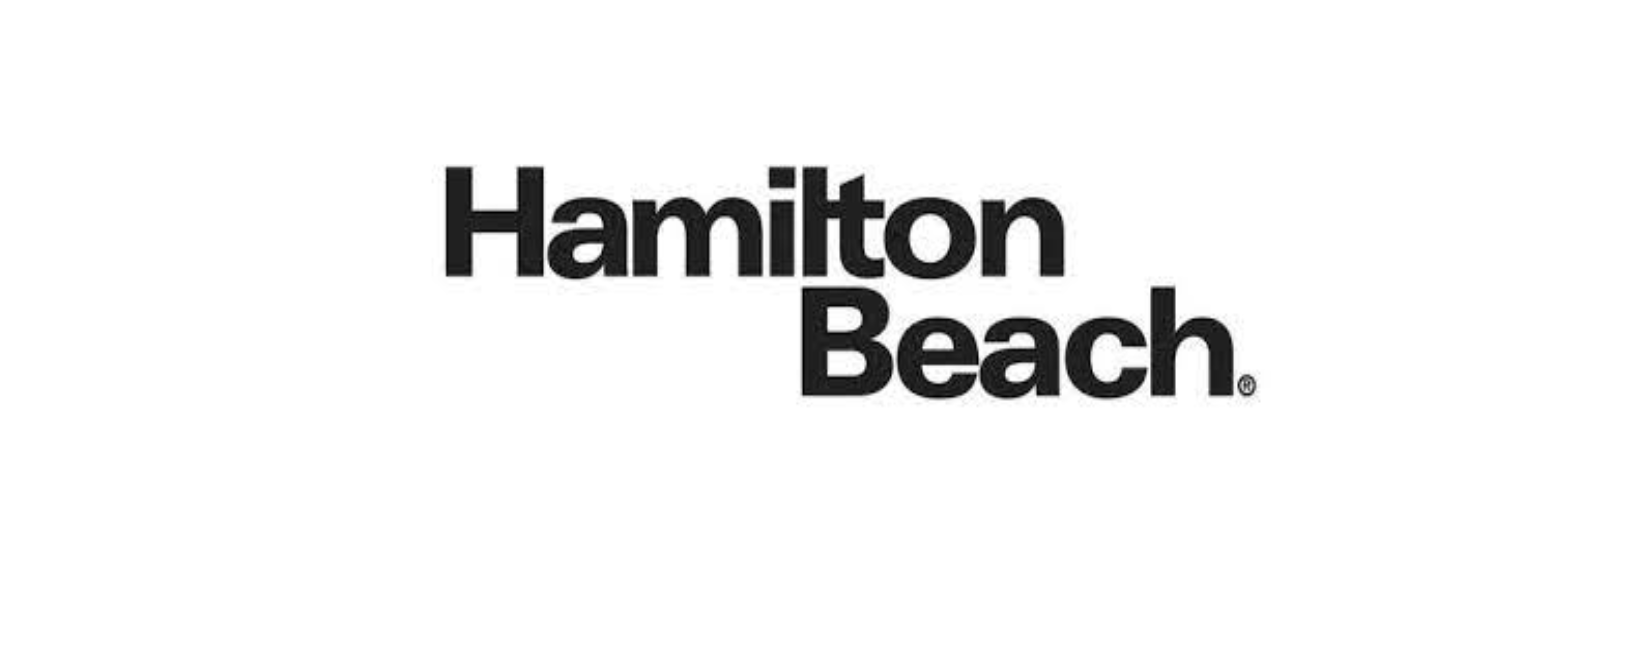 Hamilton Beach Discount Code 2022